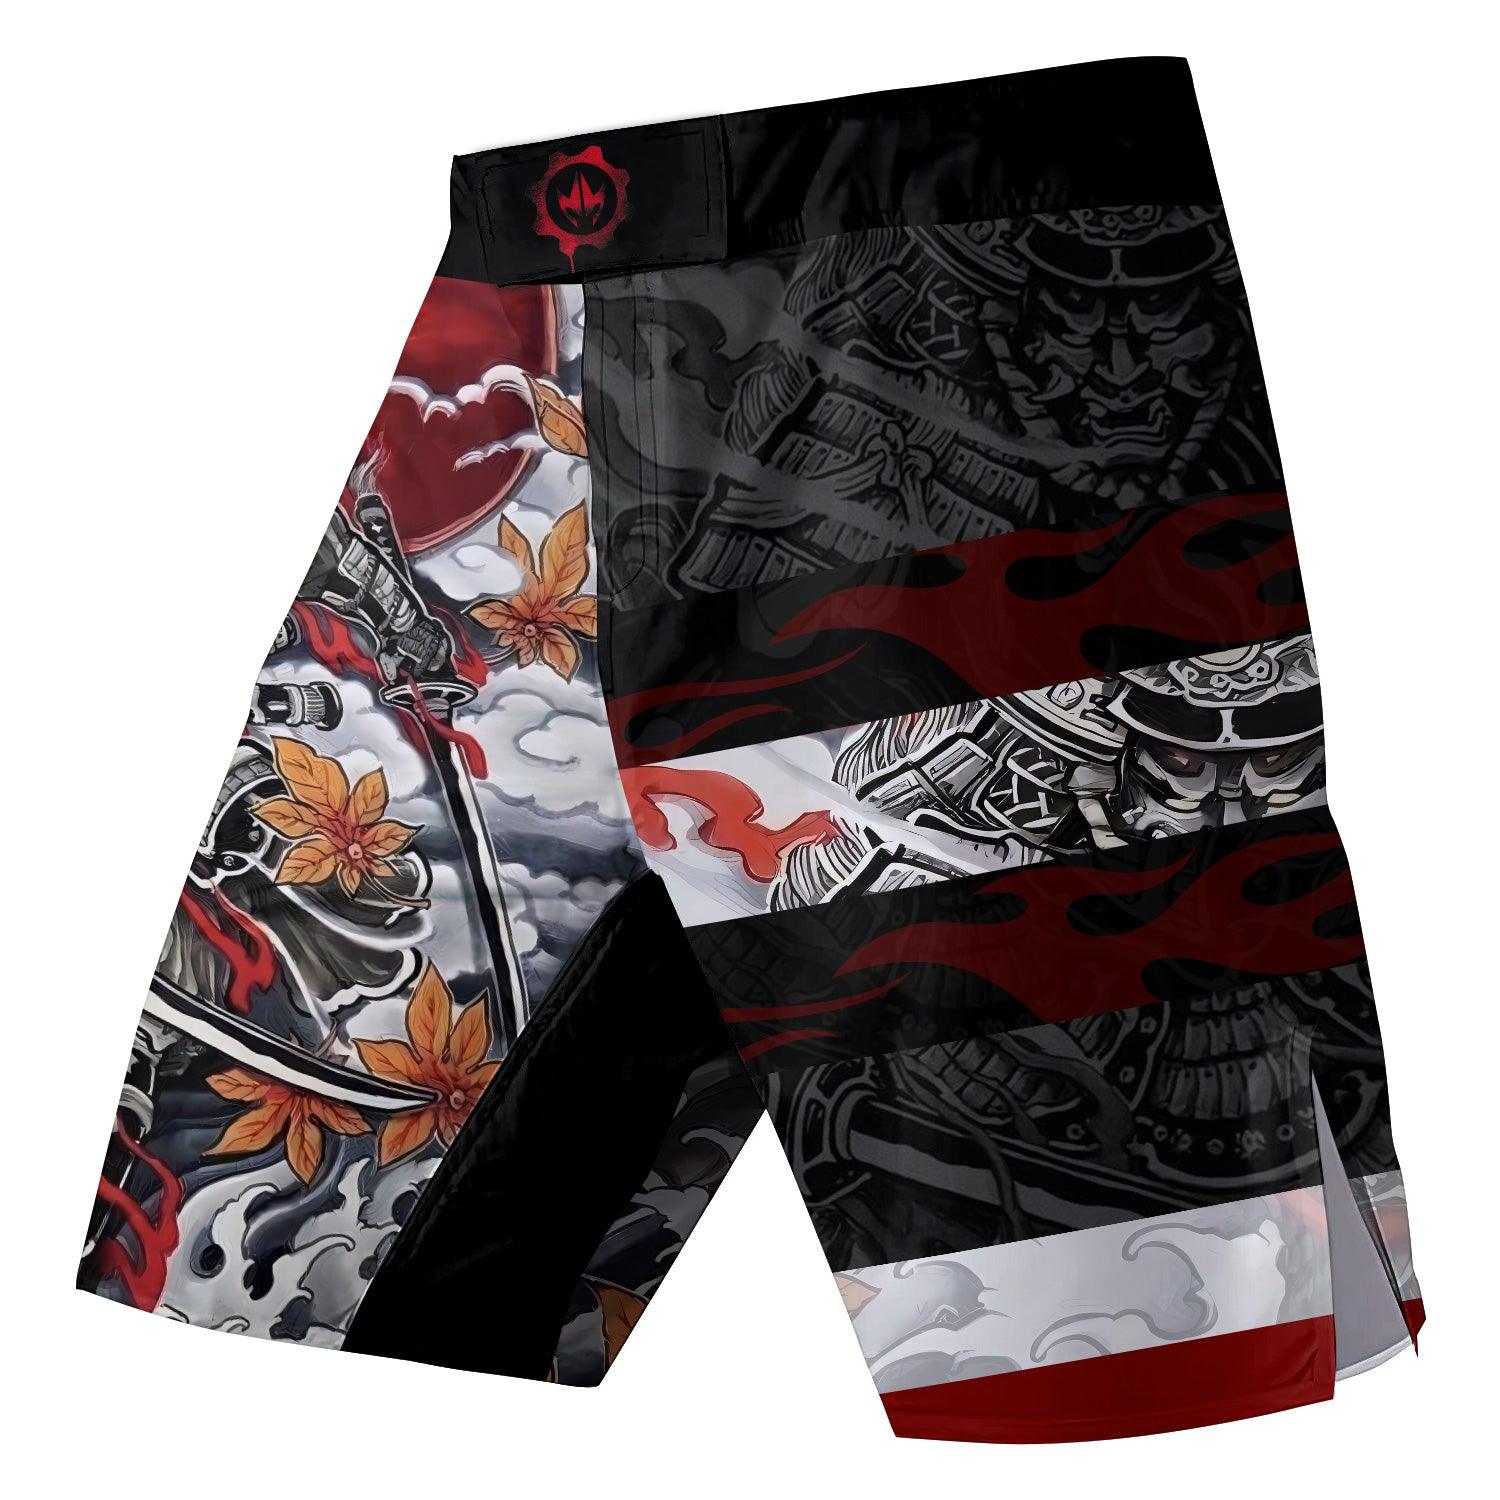 Legendary Samurai Fight Shorts